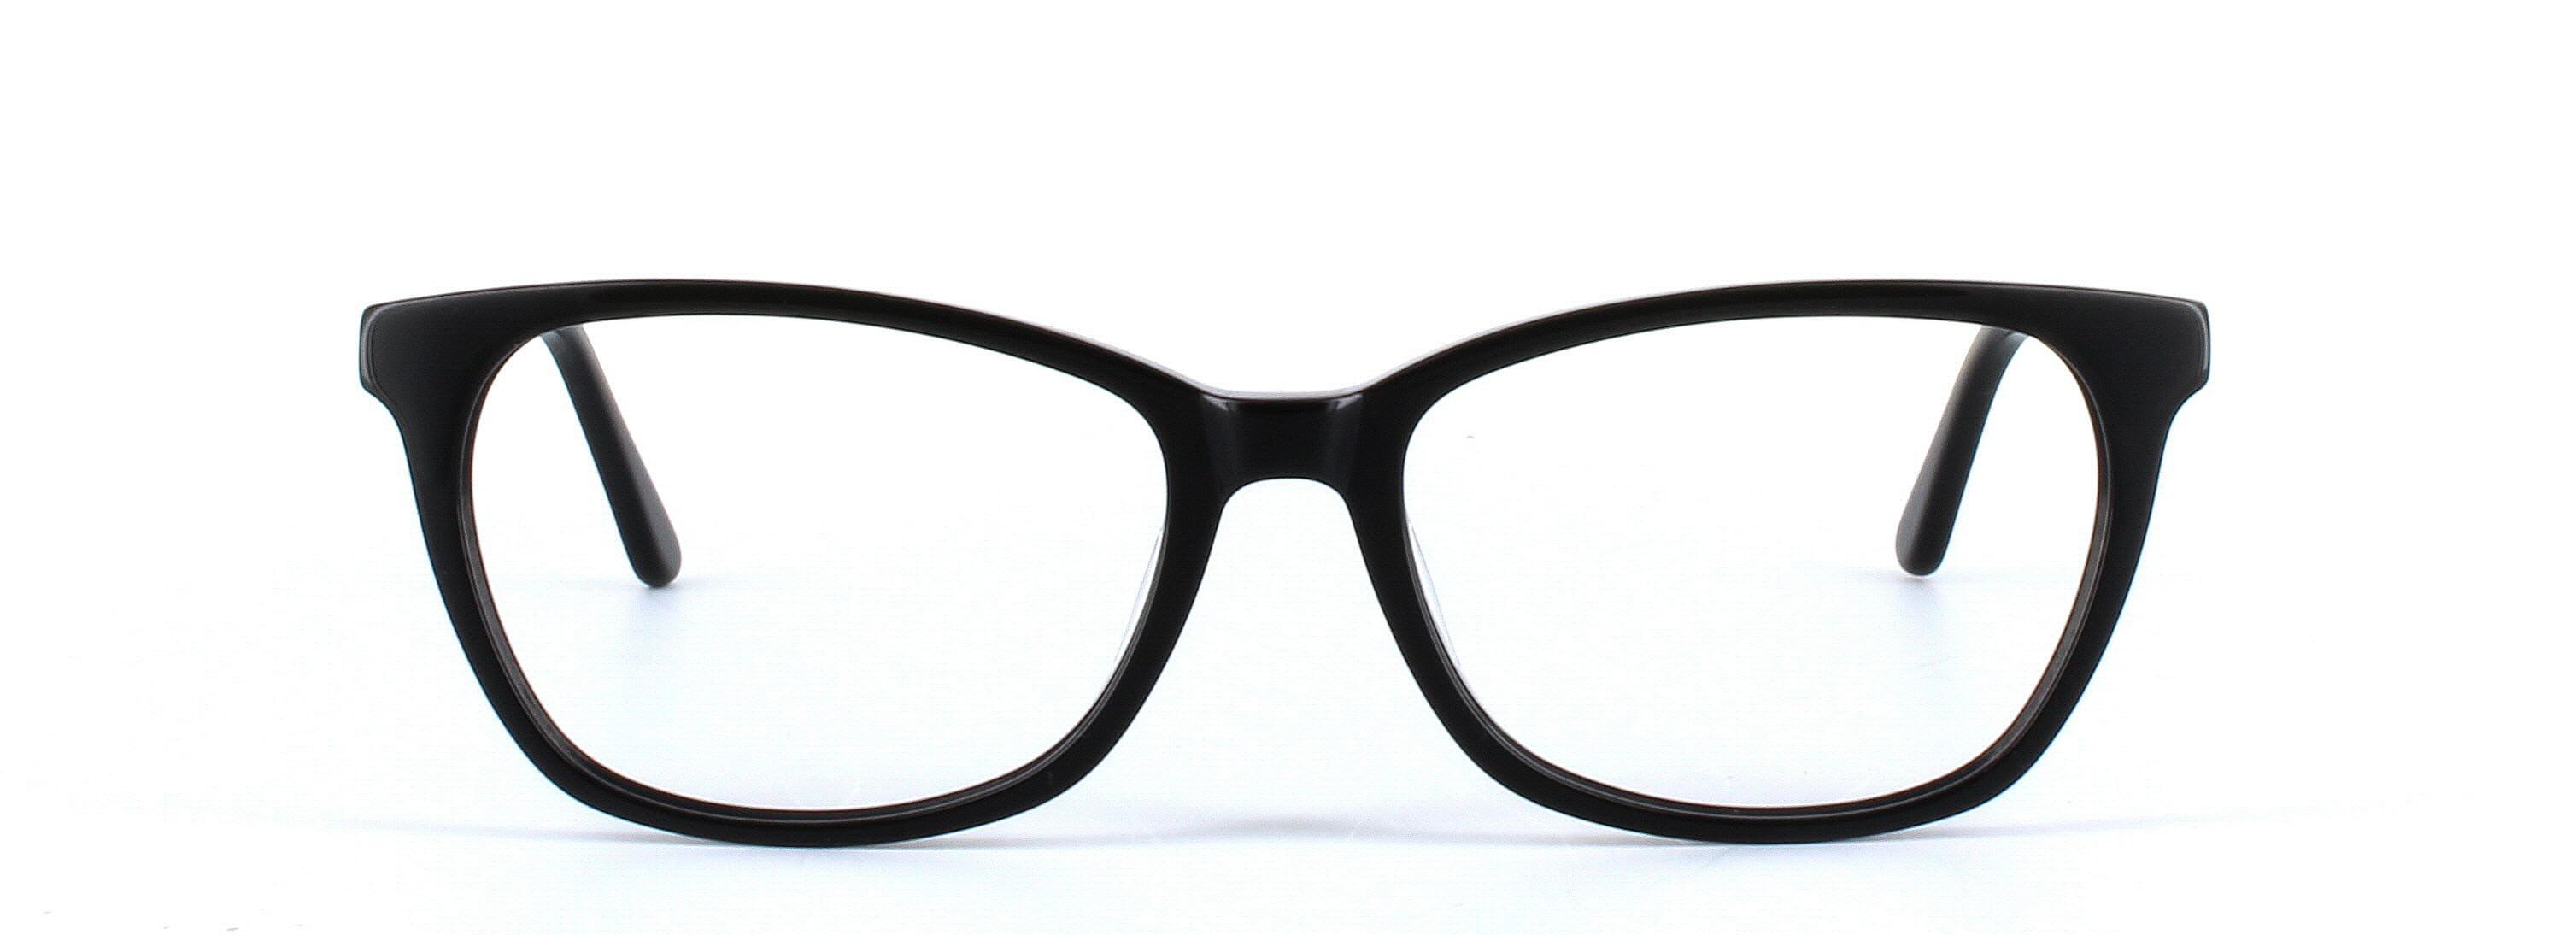 Jade Black Full Rim Oval Acetate Glasses - Image View 5